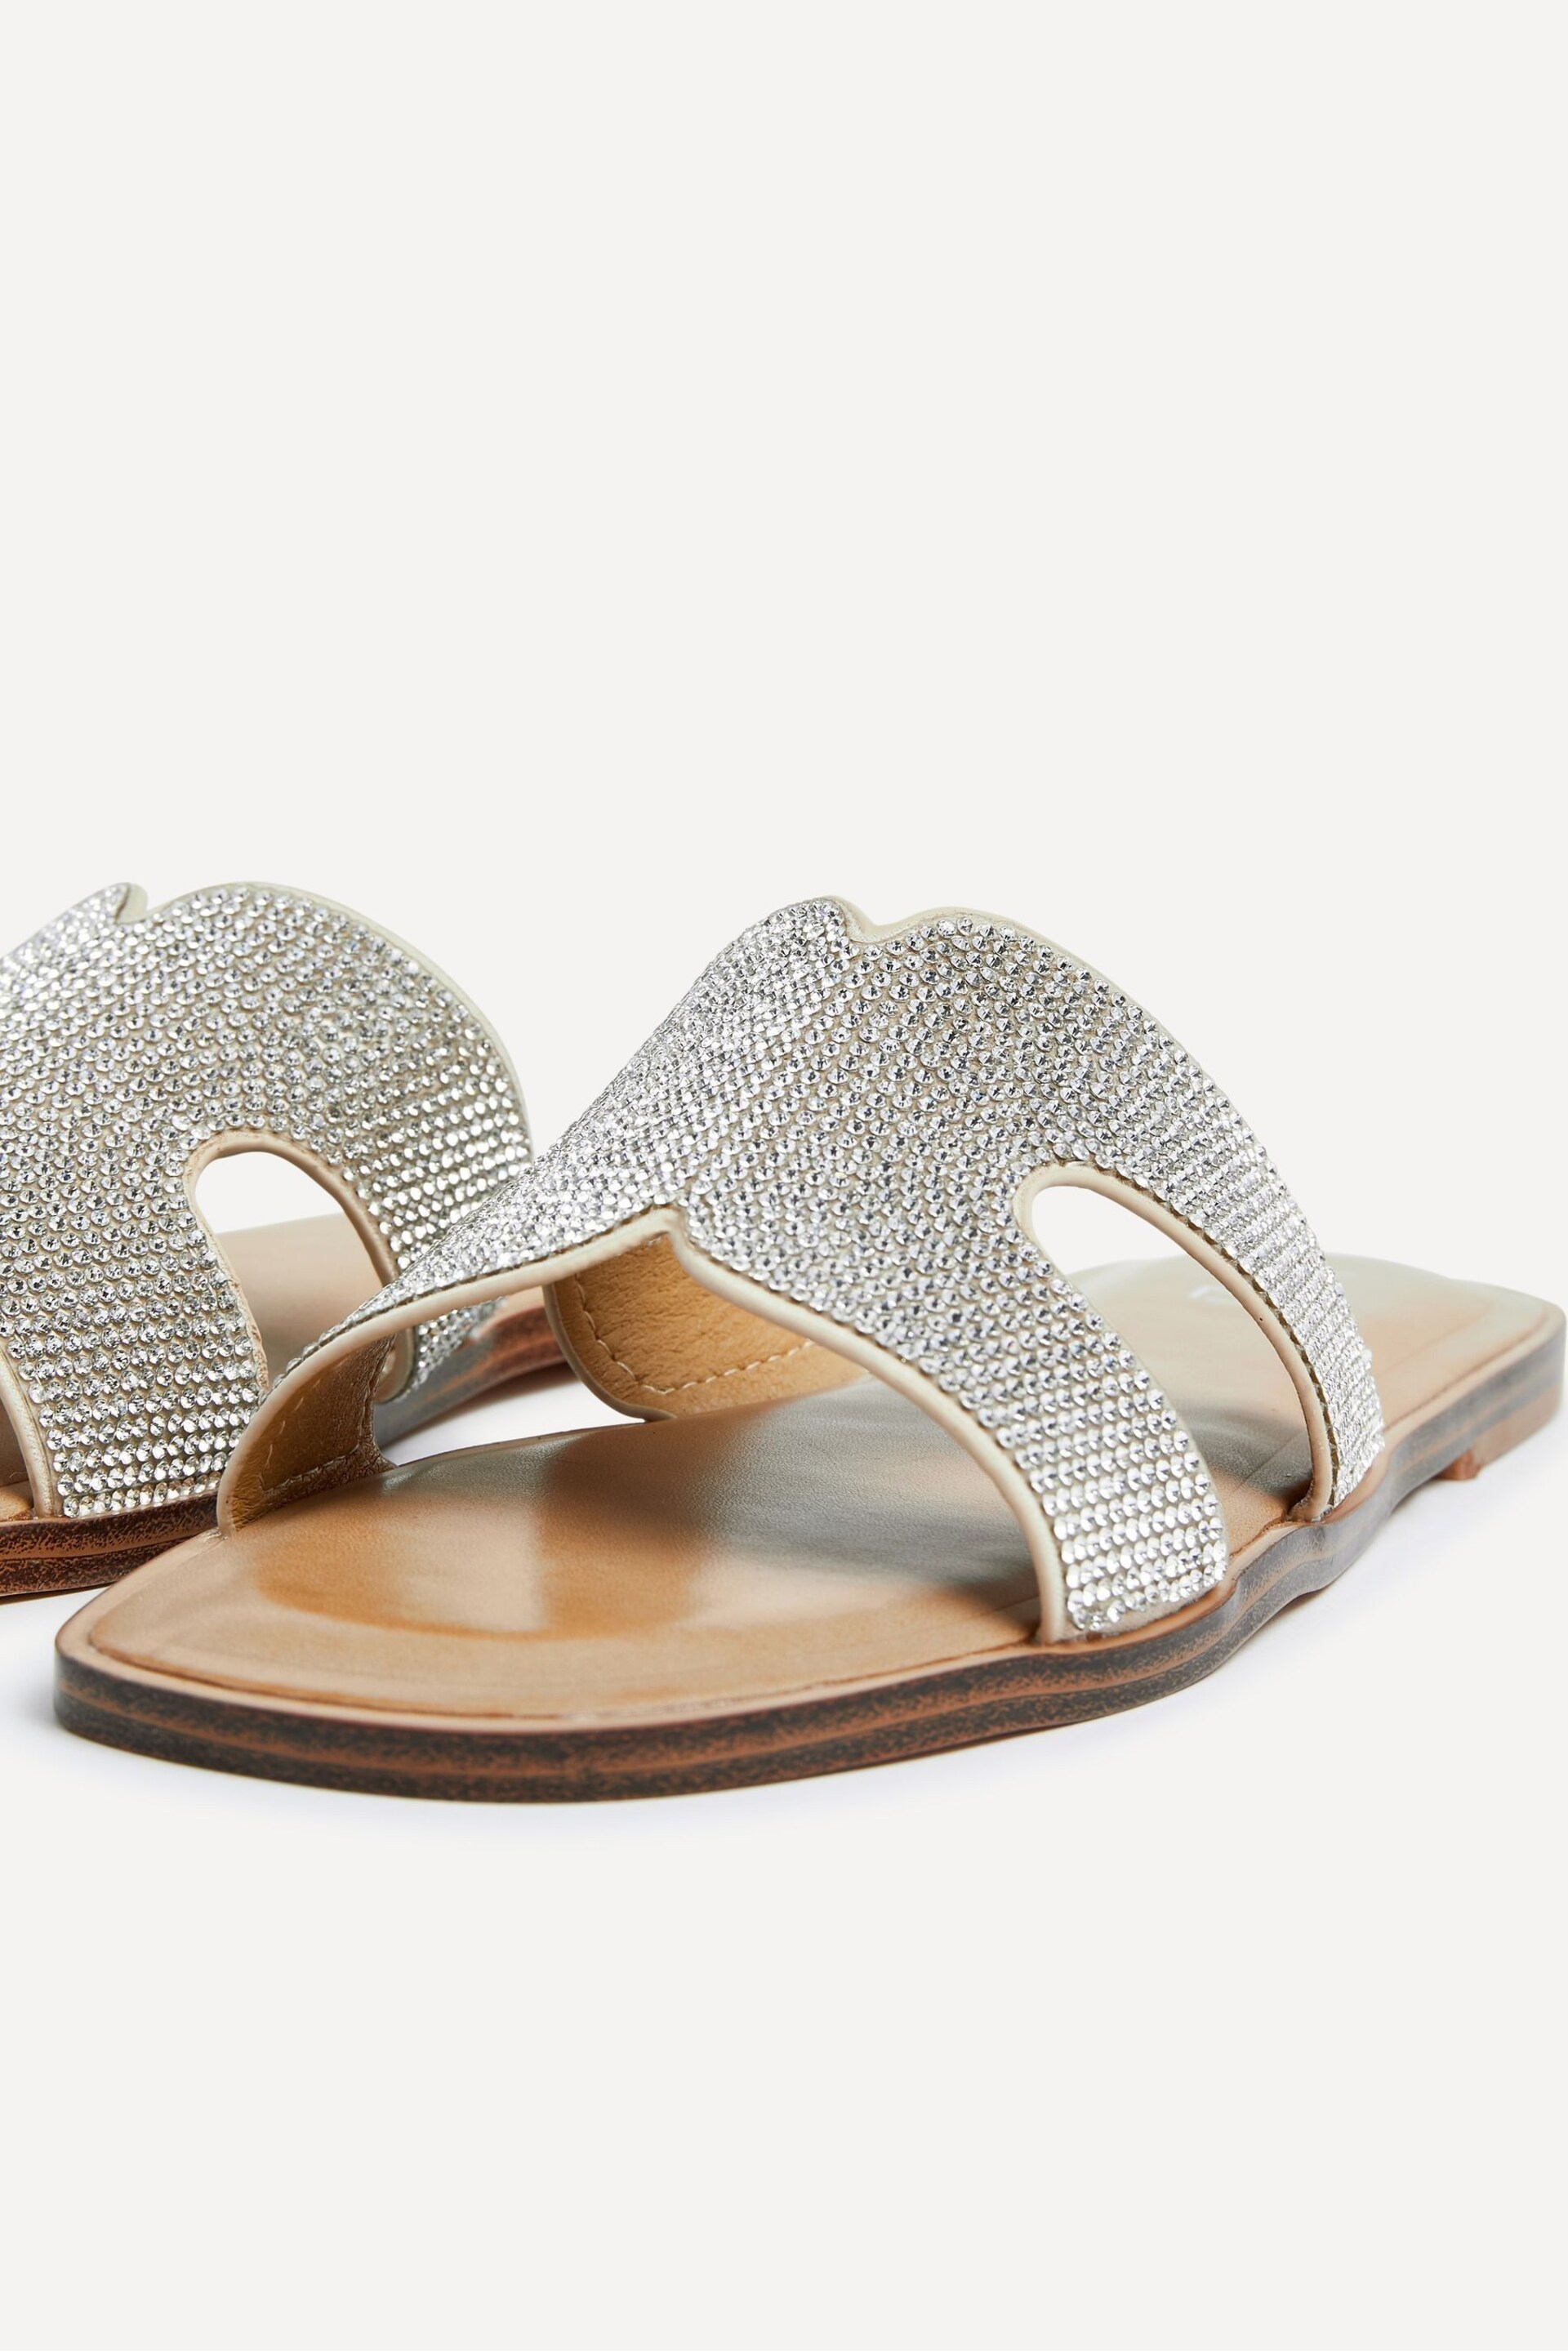 Linzi Silver Becca Diamante Embellished Flat Sandals - Image 5 of 6